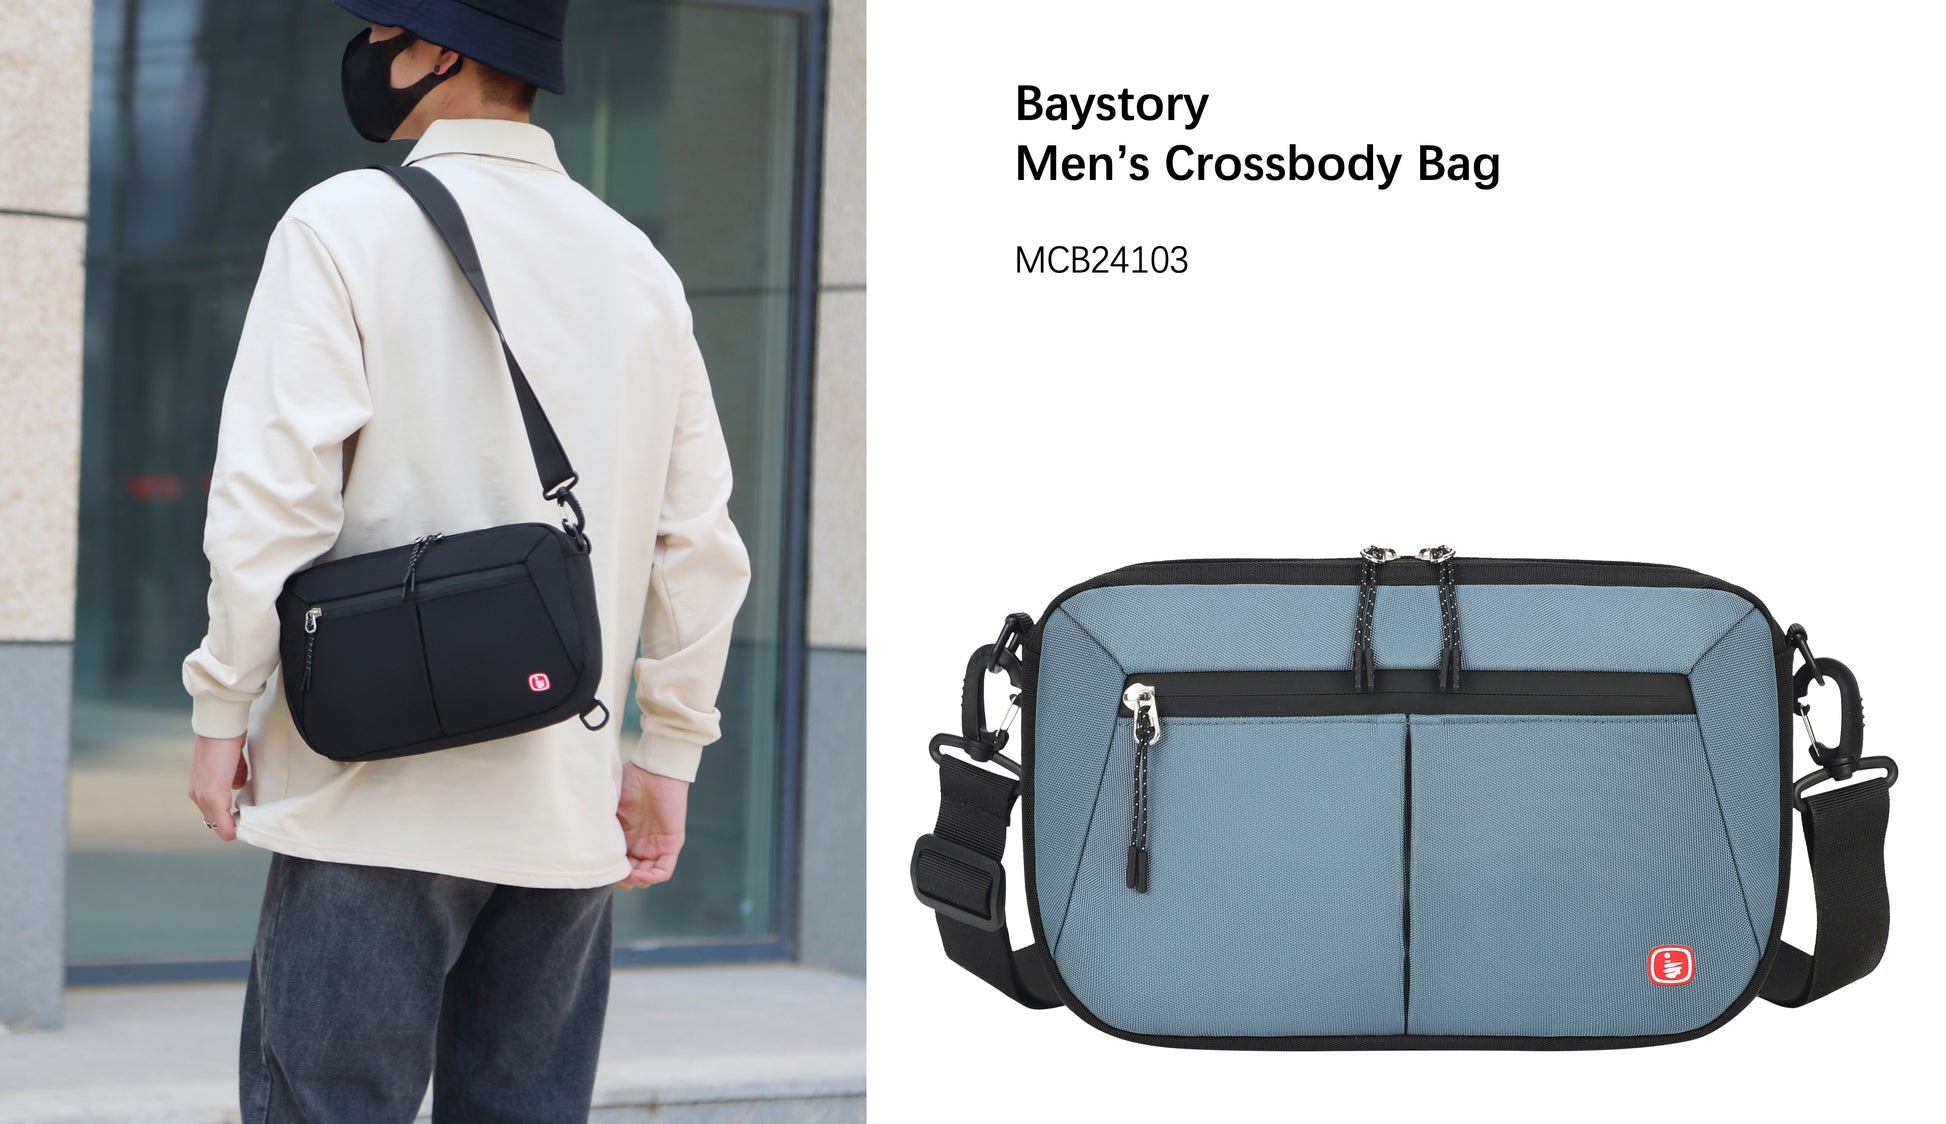 Baystory Men’s Crossbody Bag MCB24103 - Baystory